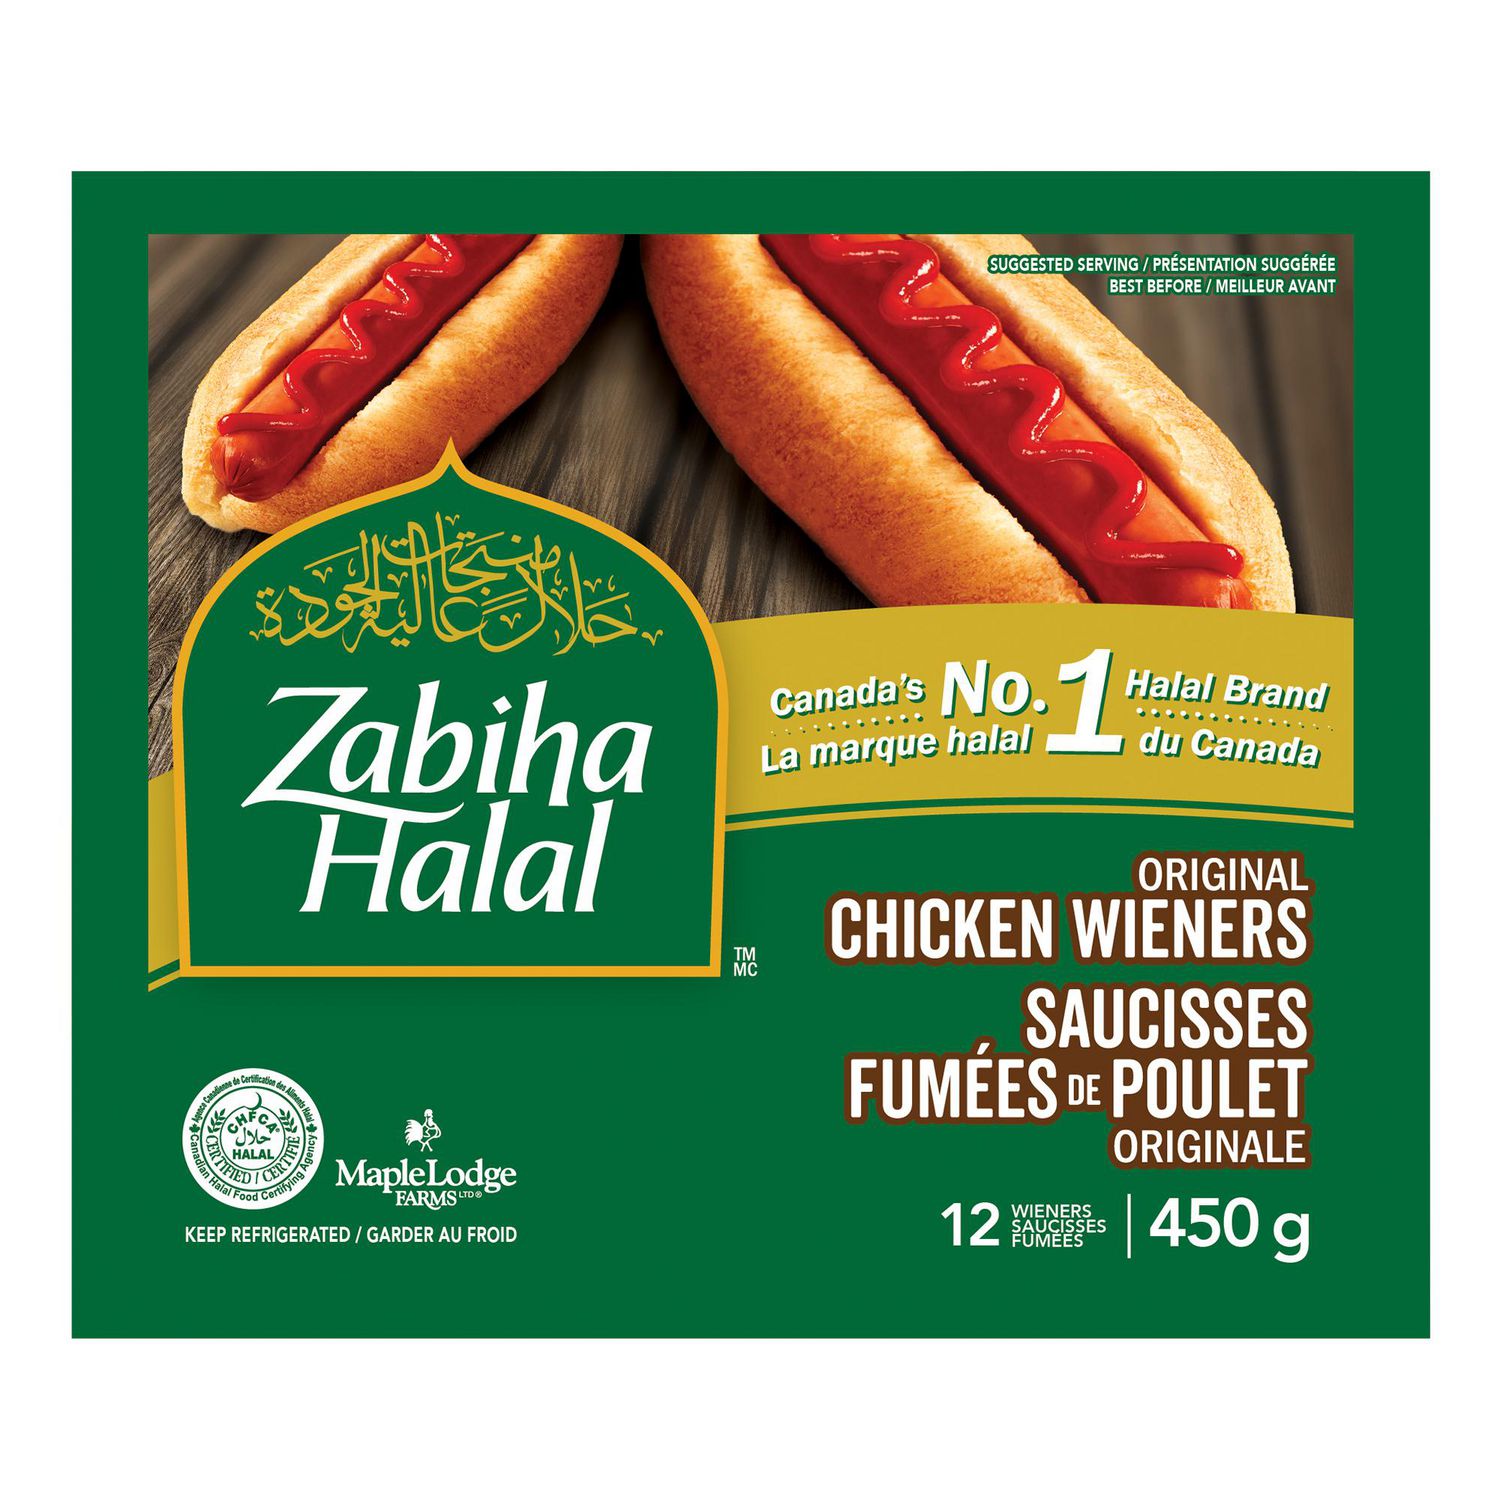 Zabiha Halal Original Chicken Wieners Walmart Canada.